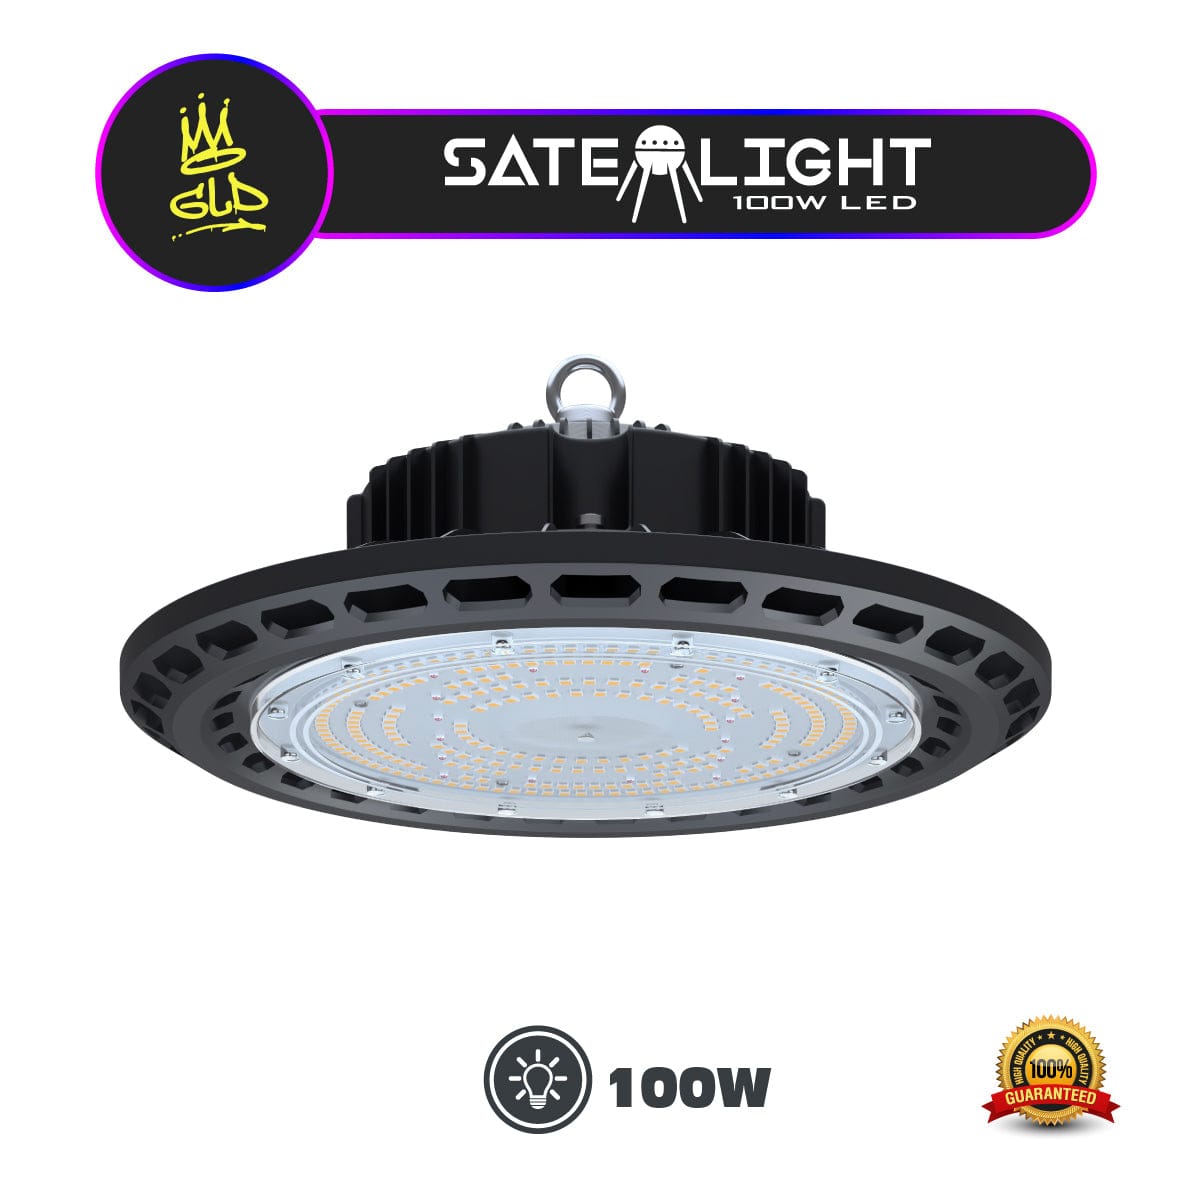 Pro Grow Hydroponic Supplies > Lighting > LED Lights GLD 100w UFO (Waterproof Design)